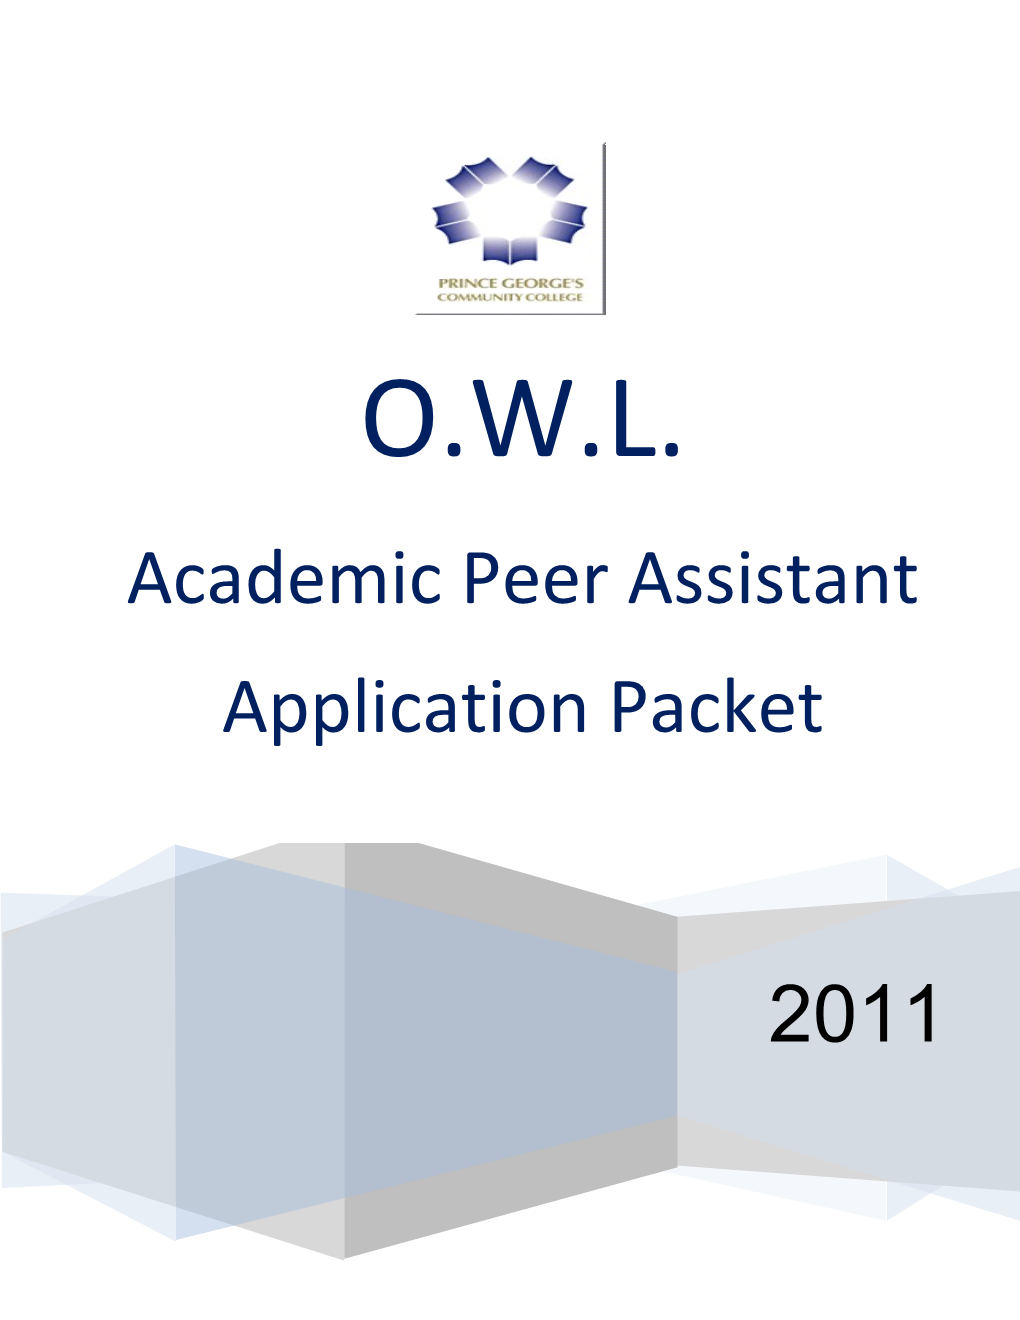 O.W.L. Academic Peer Assistance